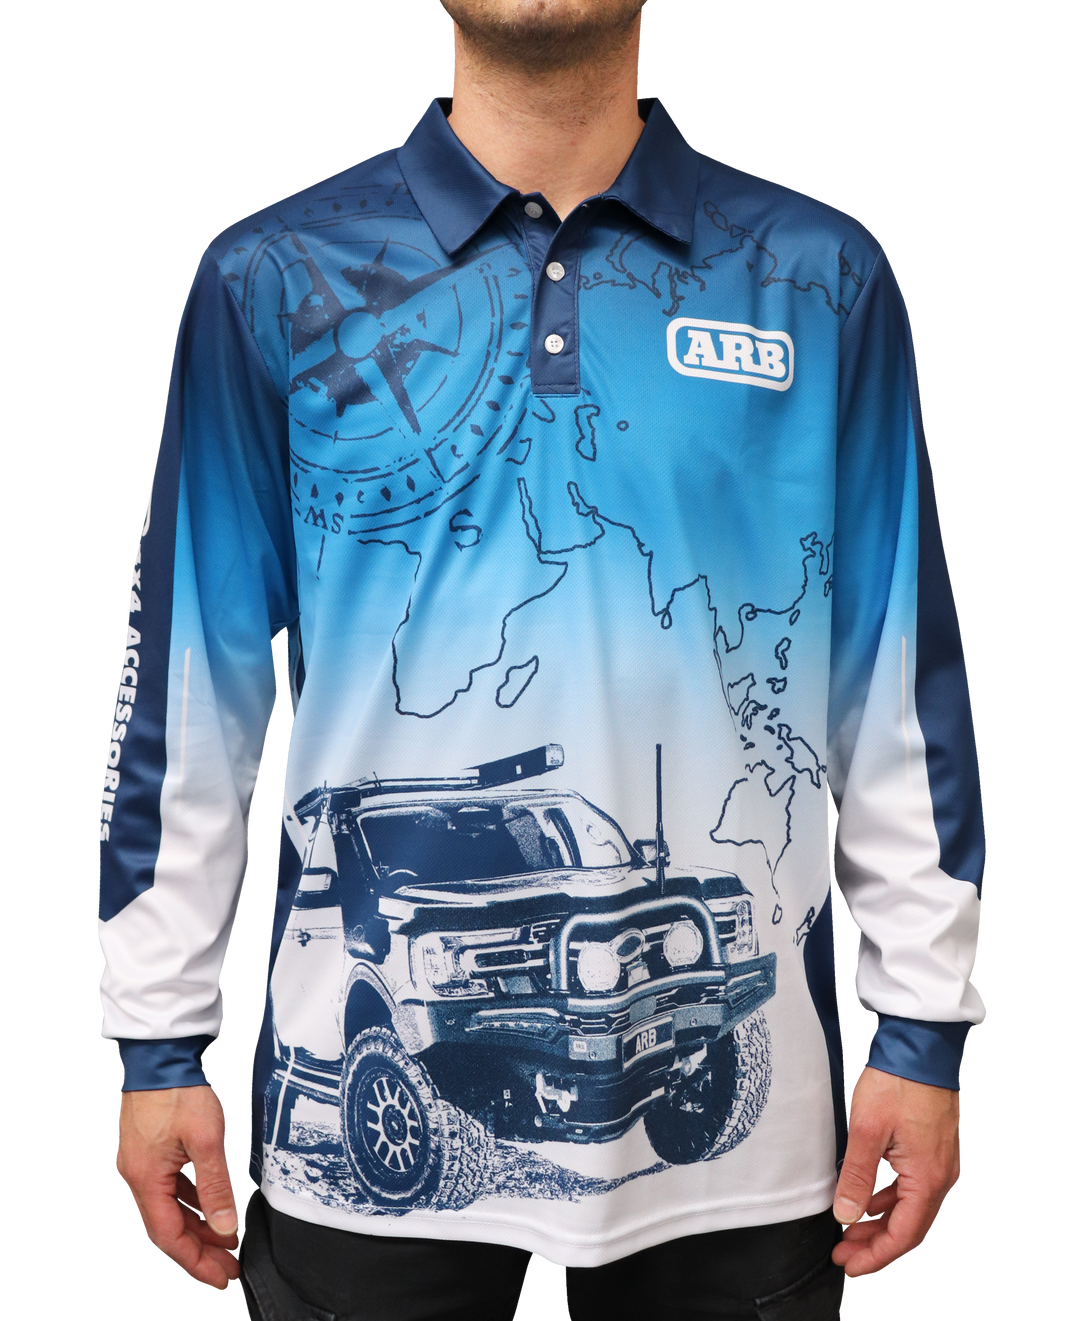 ARB Fishing Shirt with BONUS Neck Roll - Men's